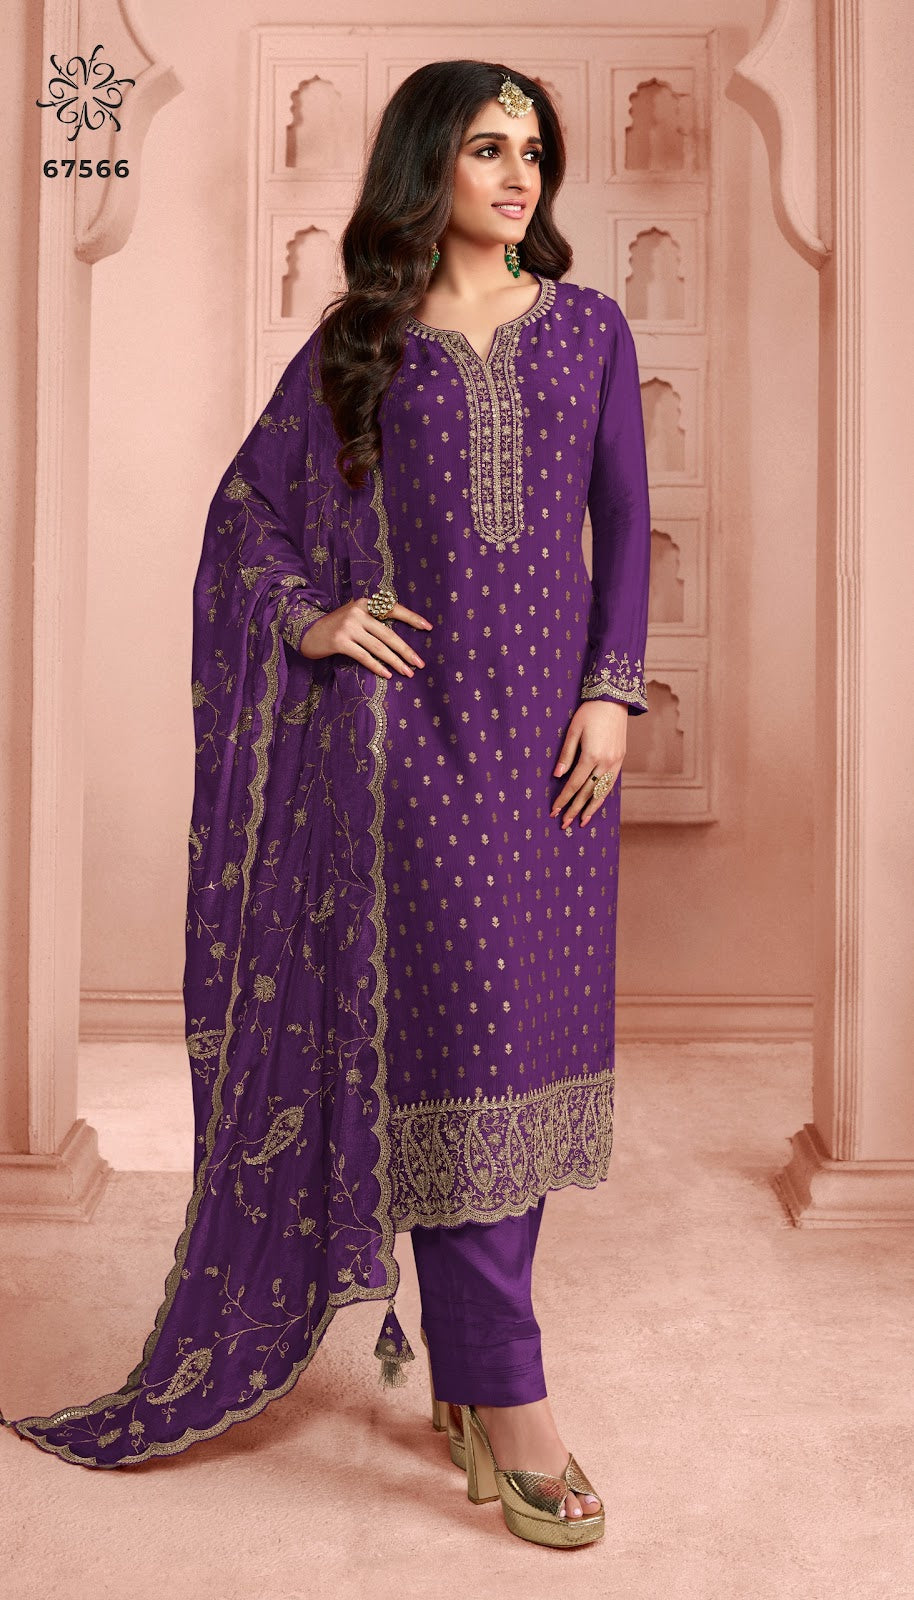 Kuleesh-Swarnaa-Colour Plus Vinay Fashion Llp Dola Jacquard Pant Style Suits